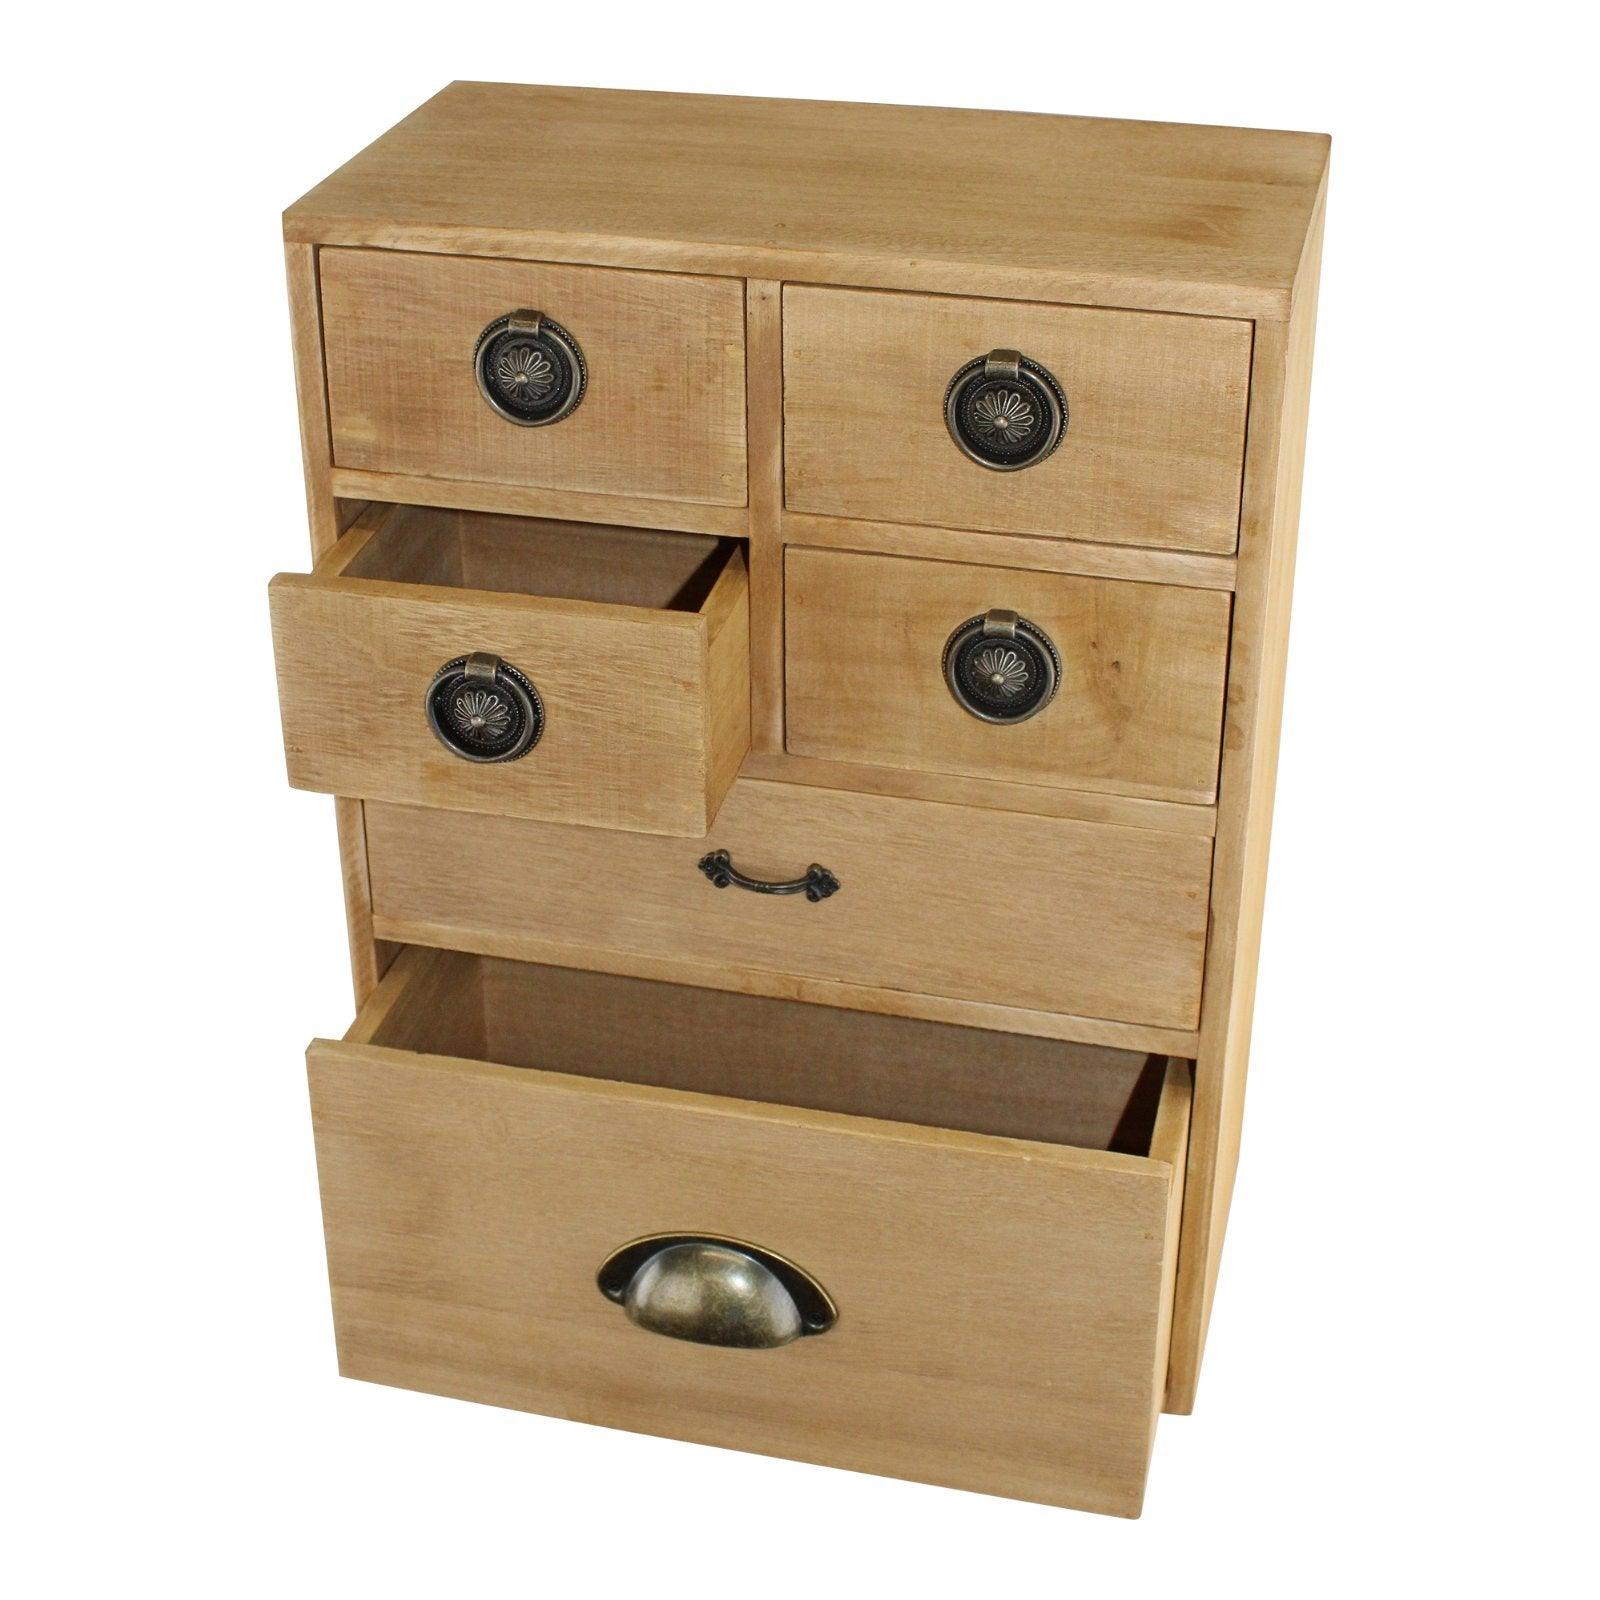 6 Drawer Storage Cabinet, Assorted Size Drawers - £57.99 - Trinket Drawers 